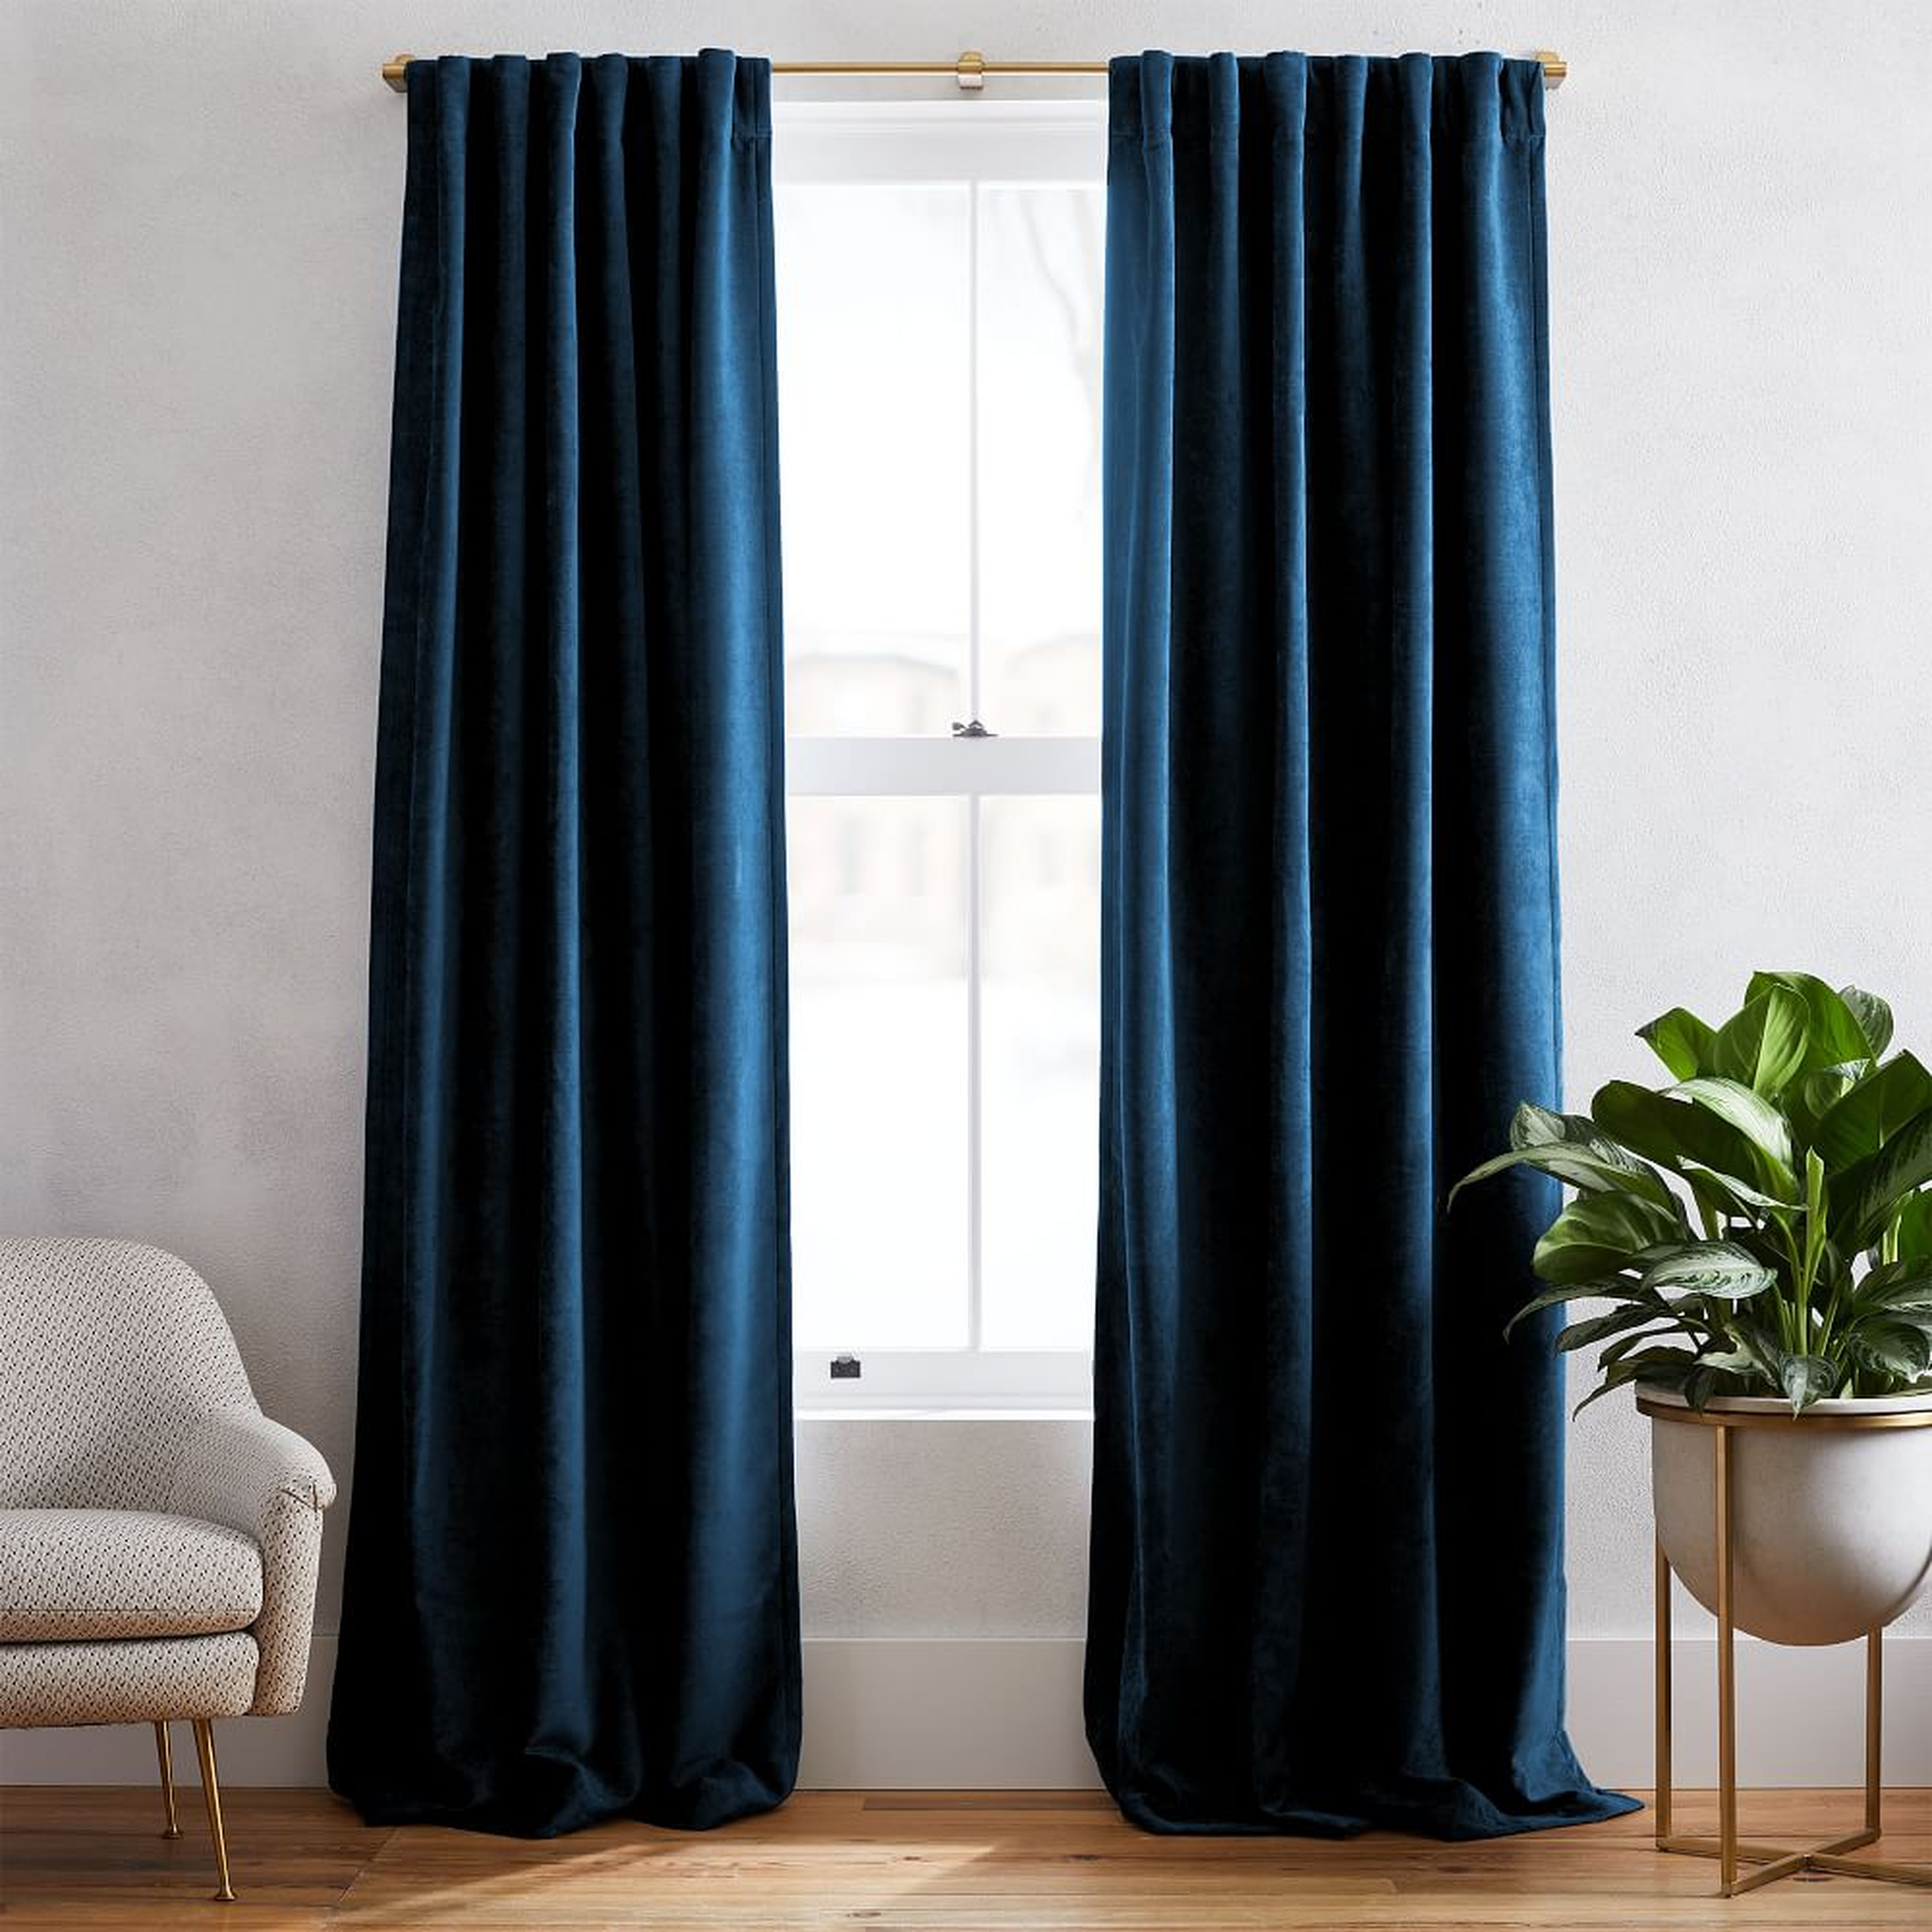 Worn Velvet Curtain with Blackout Lining, Regal Blue, 48"x96" - West Elm